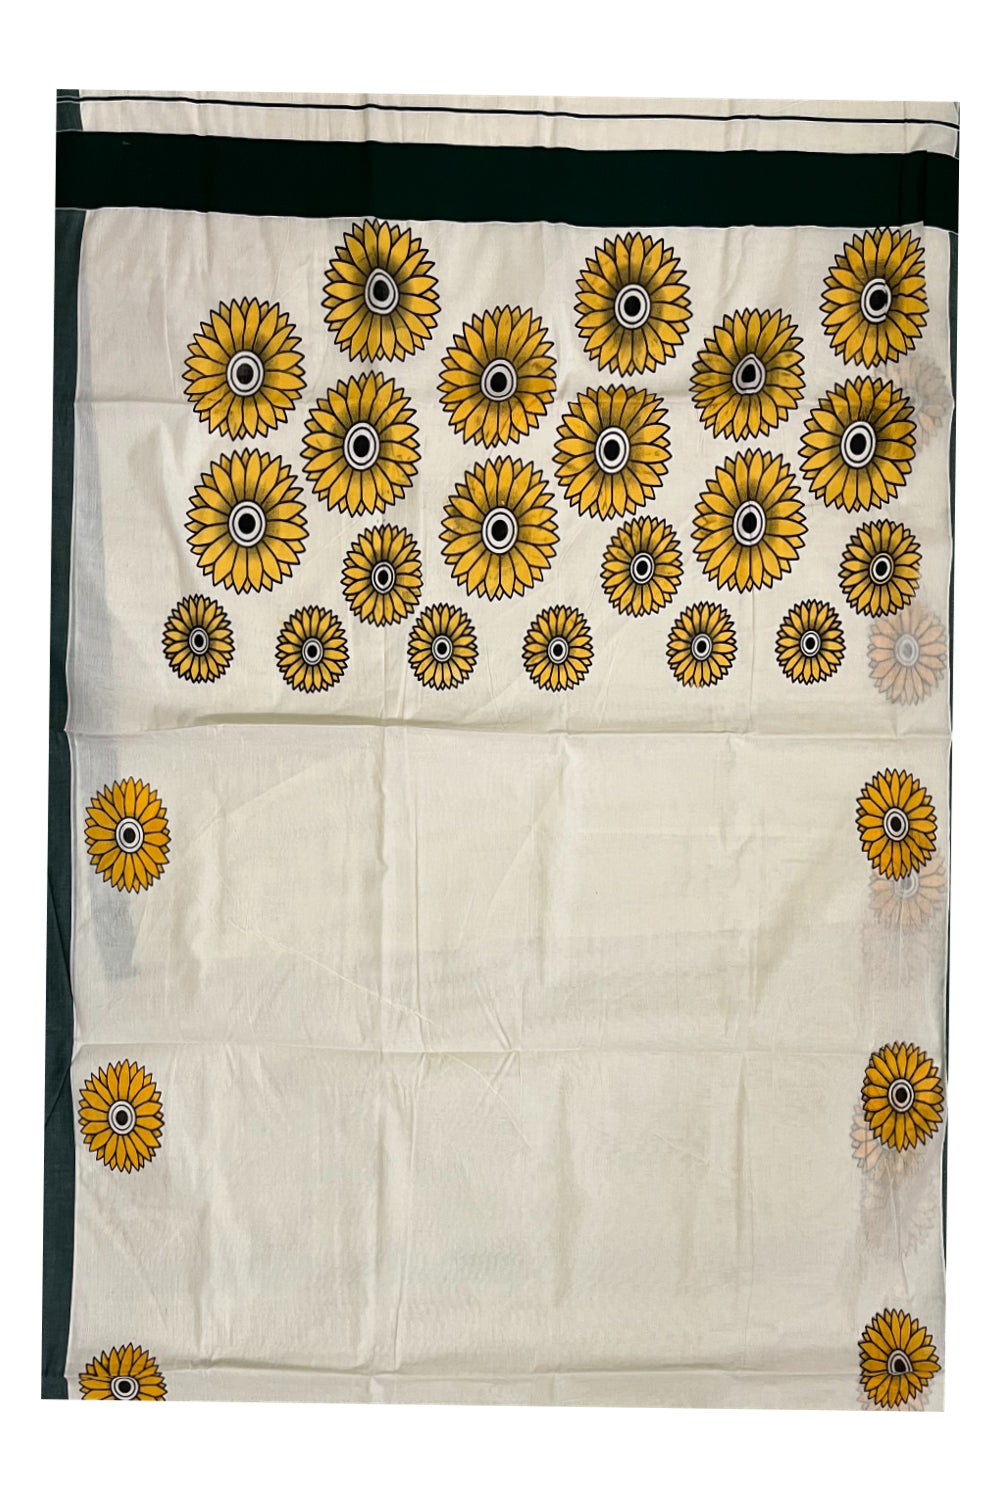 Kerala Cotton Saree with Sunflower Prints on Body and Dark Green Border